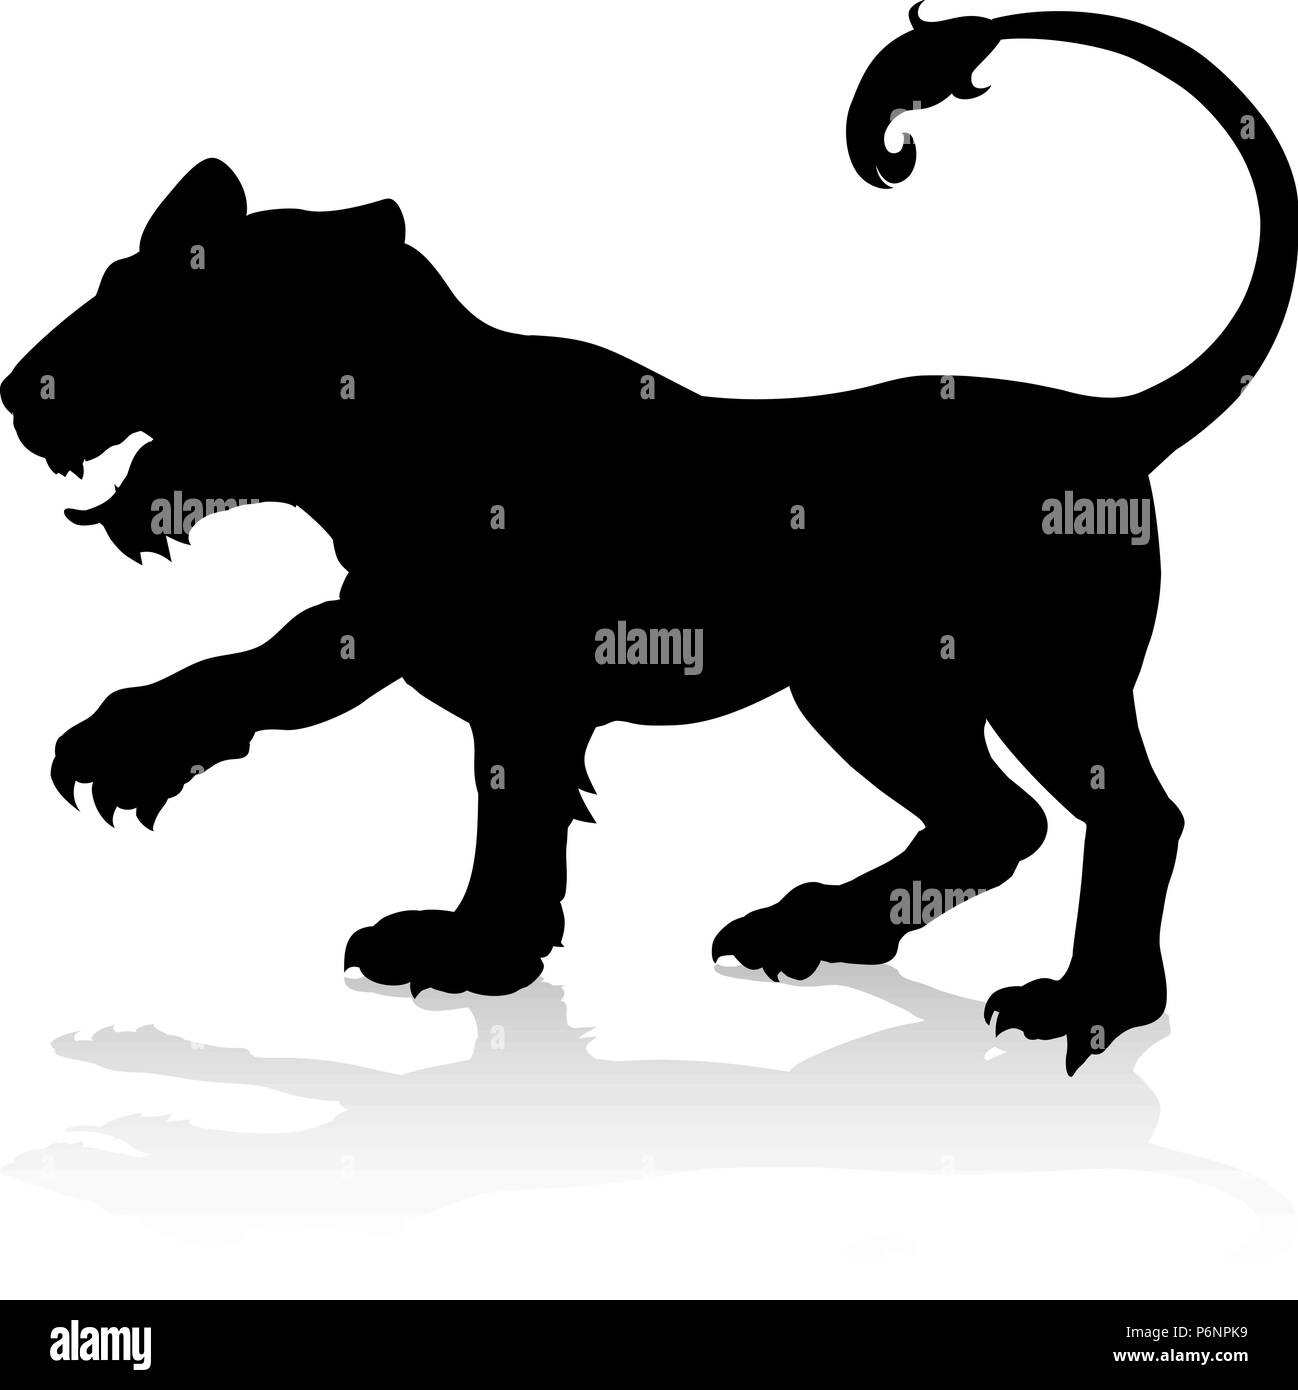 Tiger Animal Silhouette Stock Vector